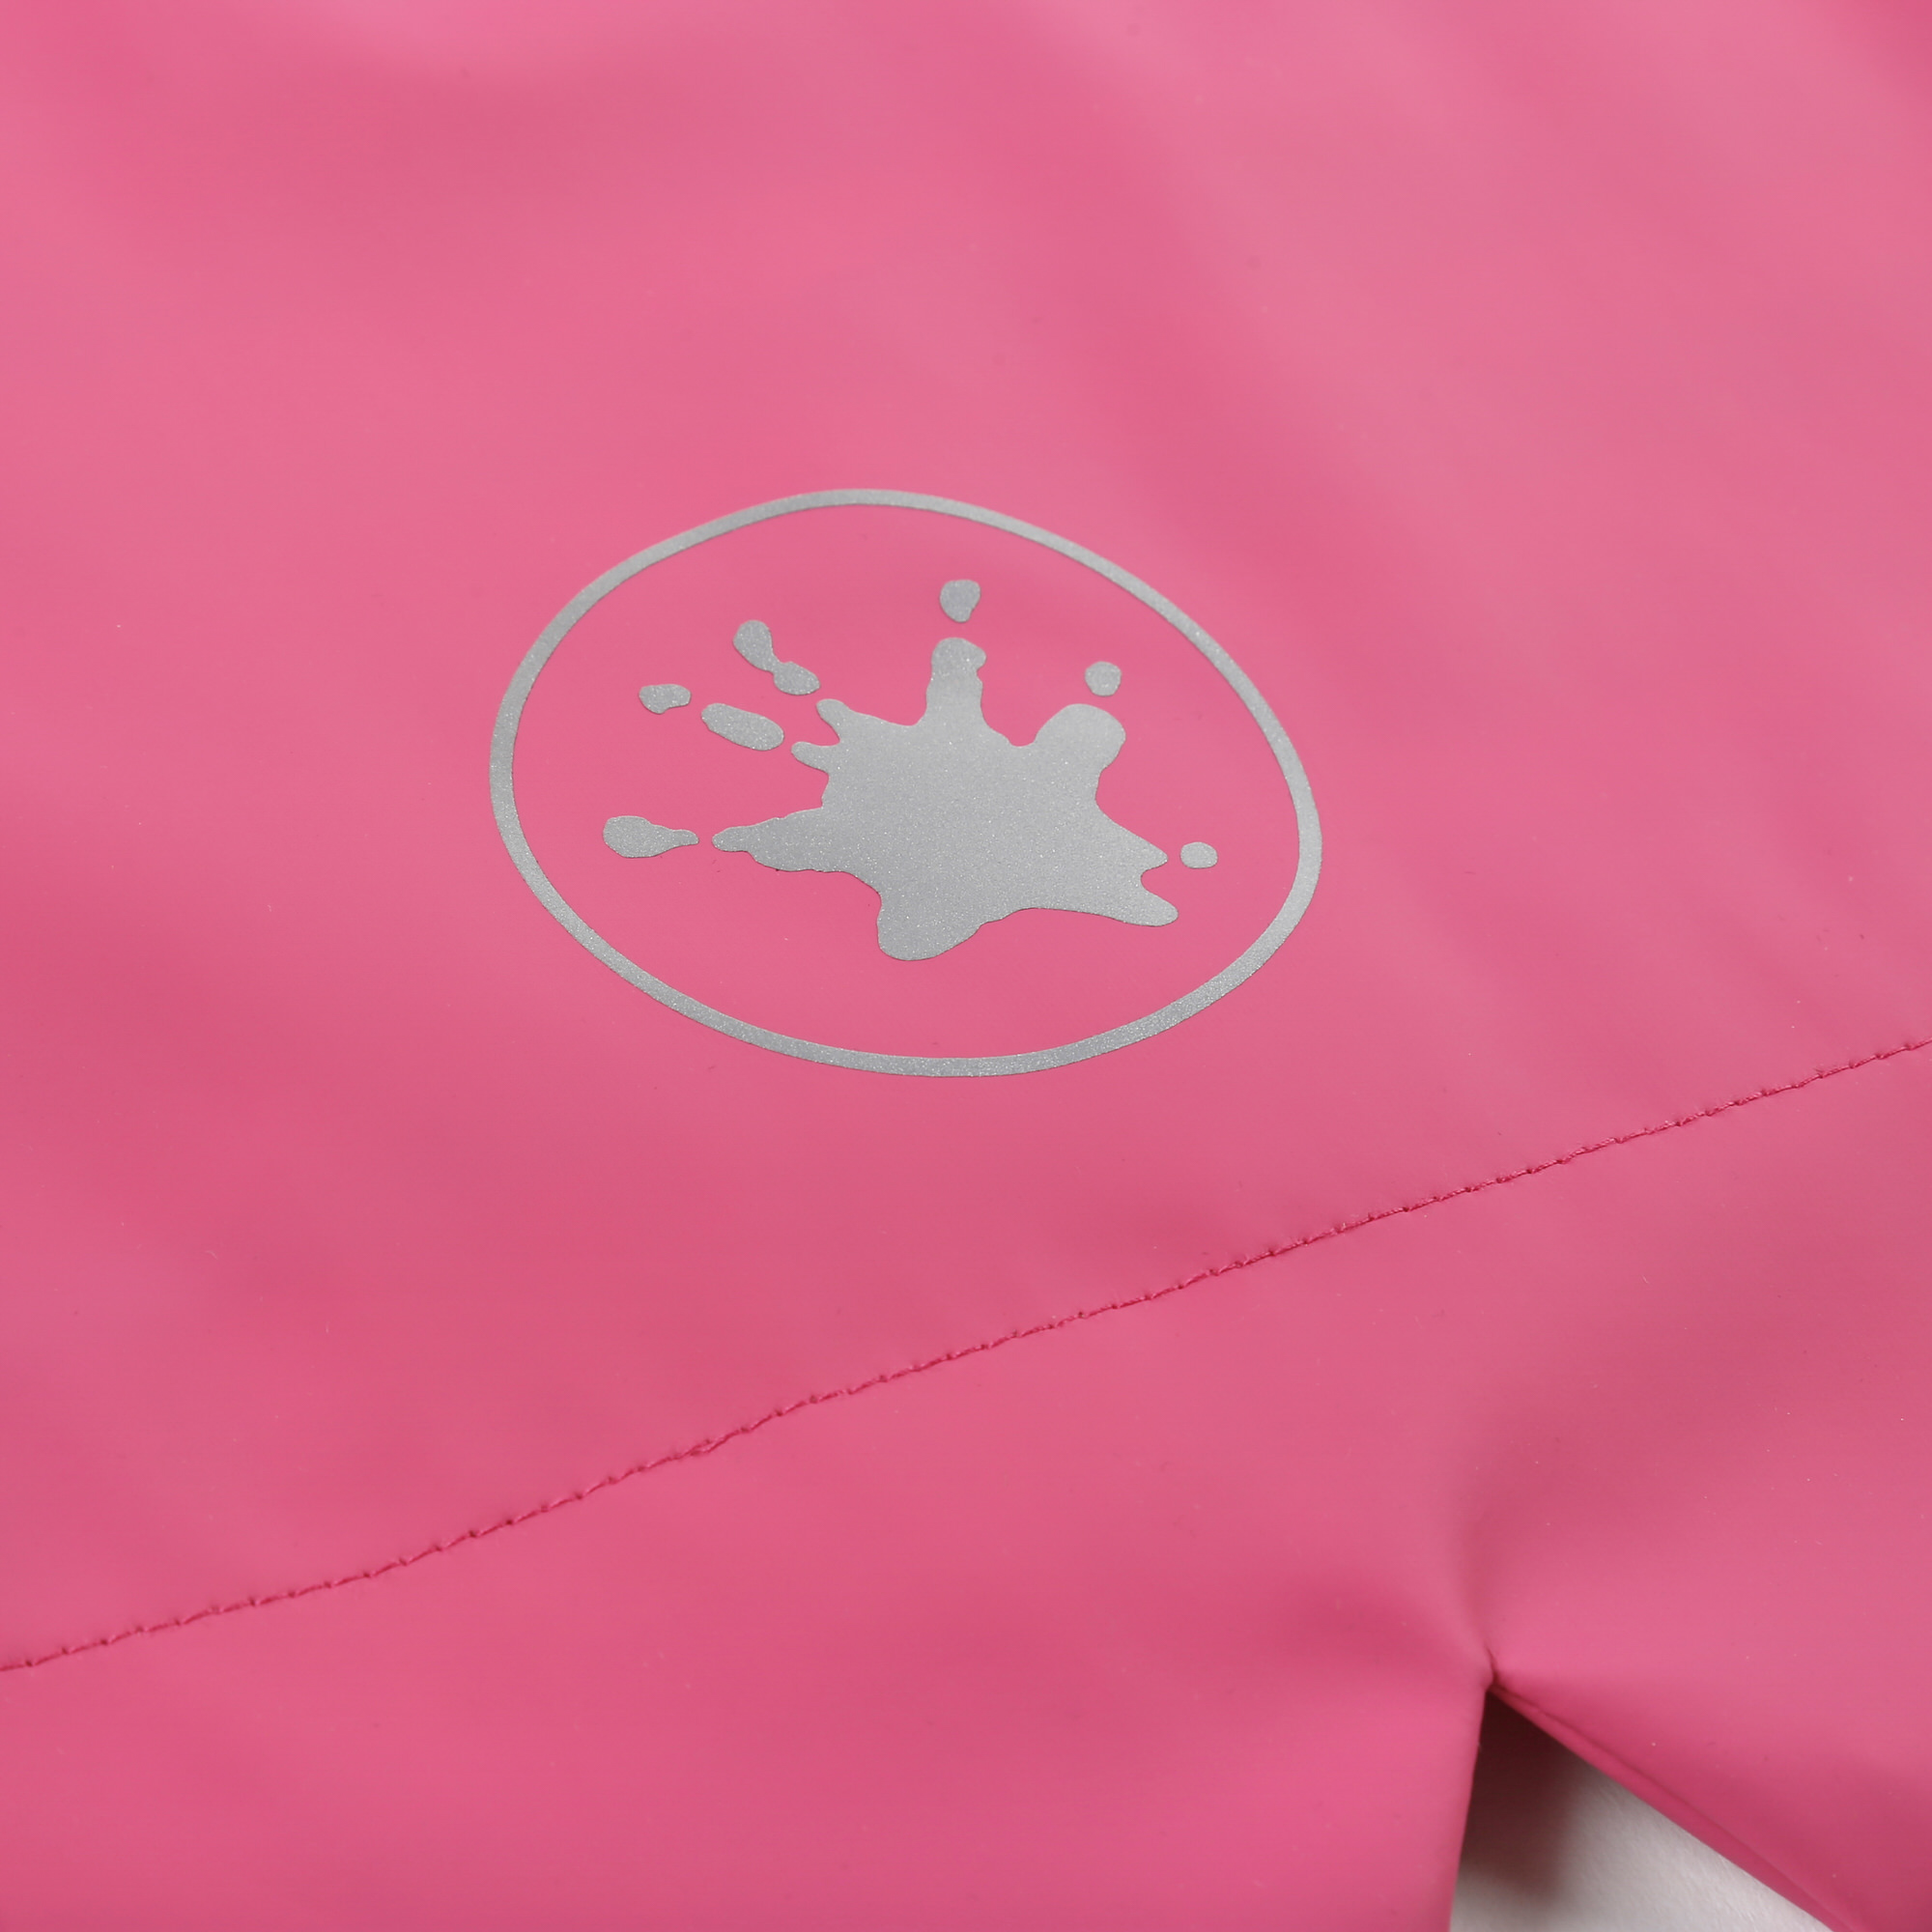 Girls' rain jacket, lined, pink